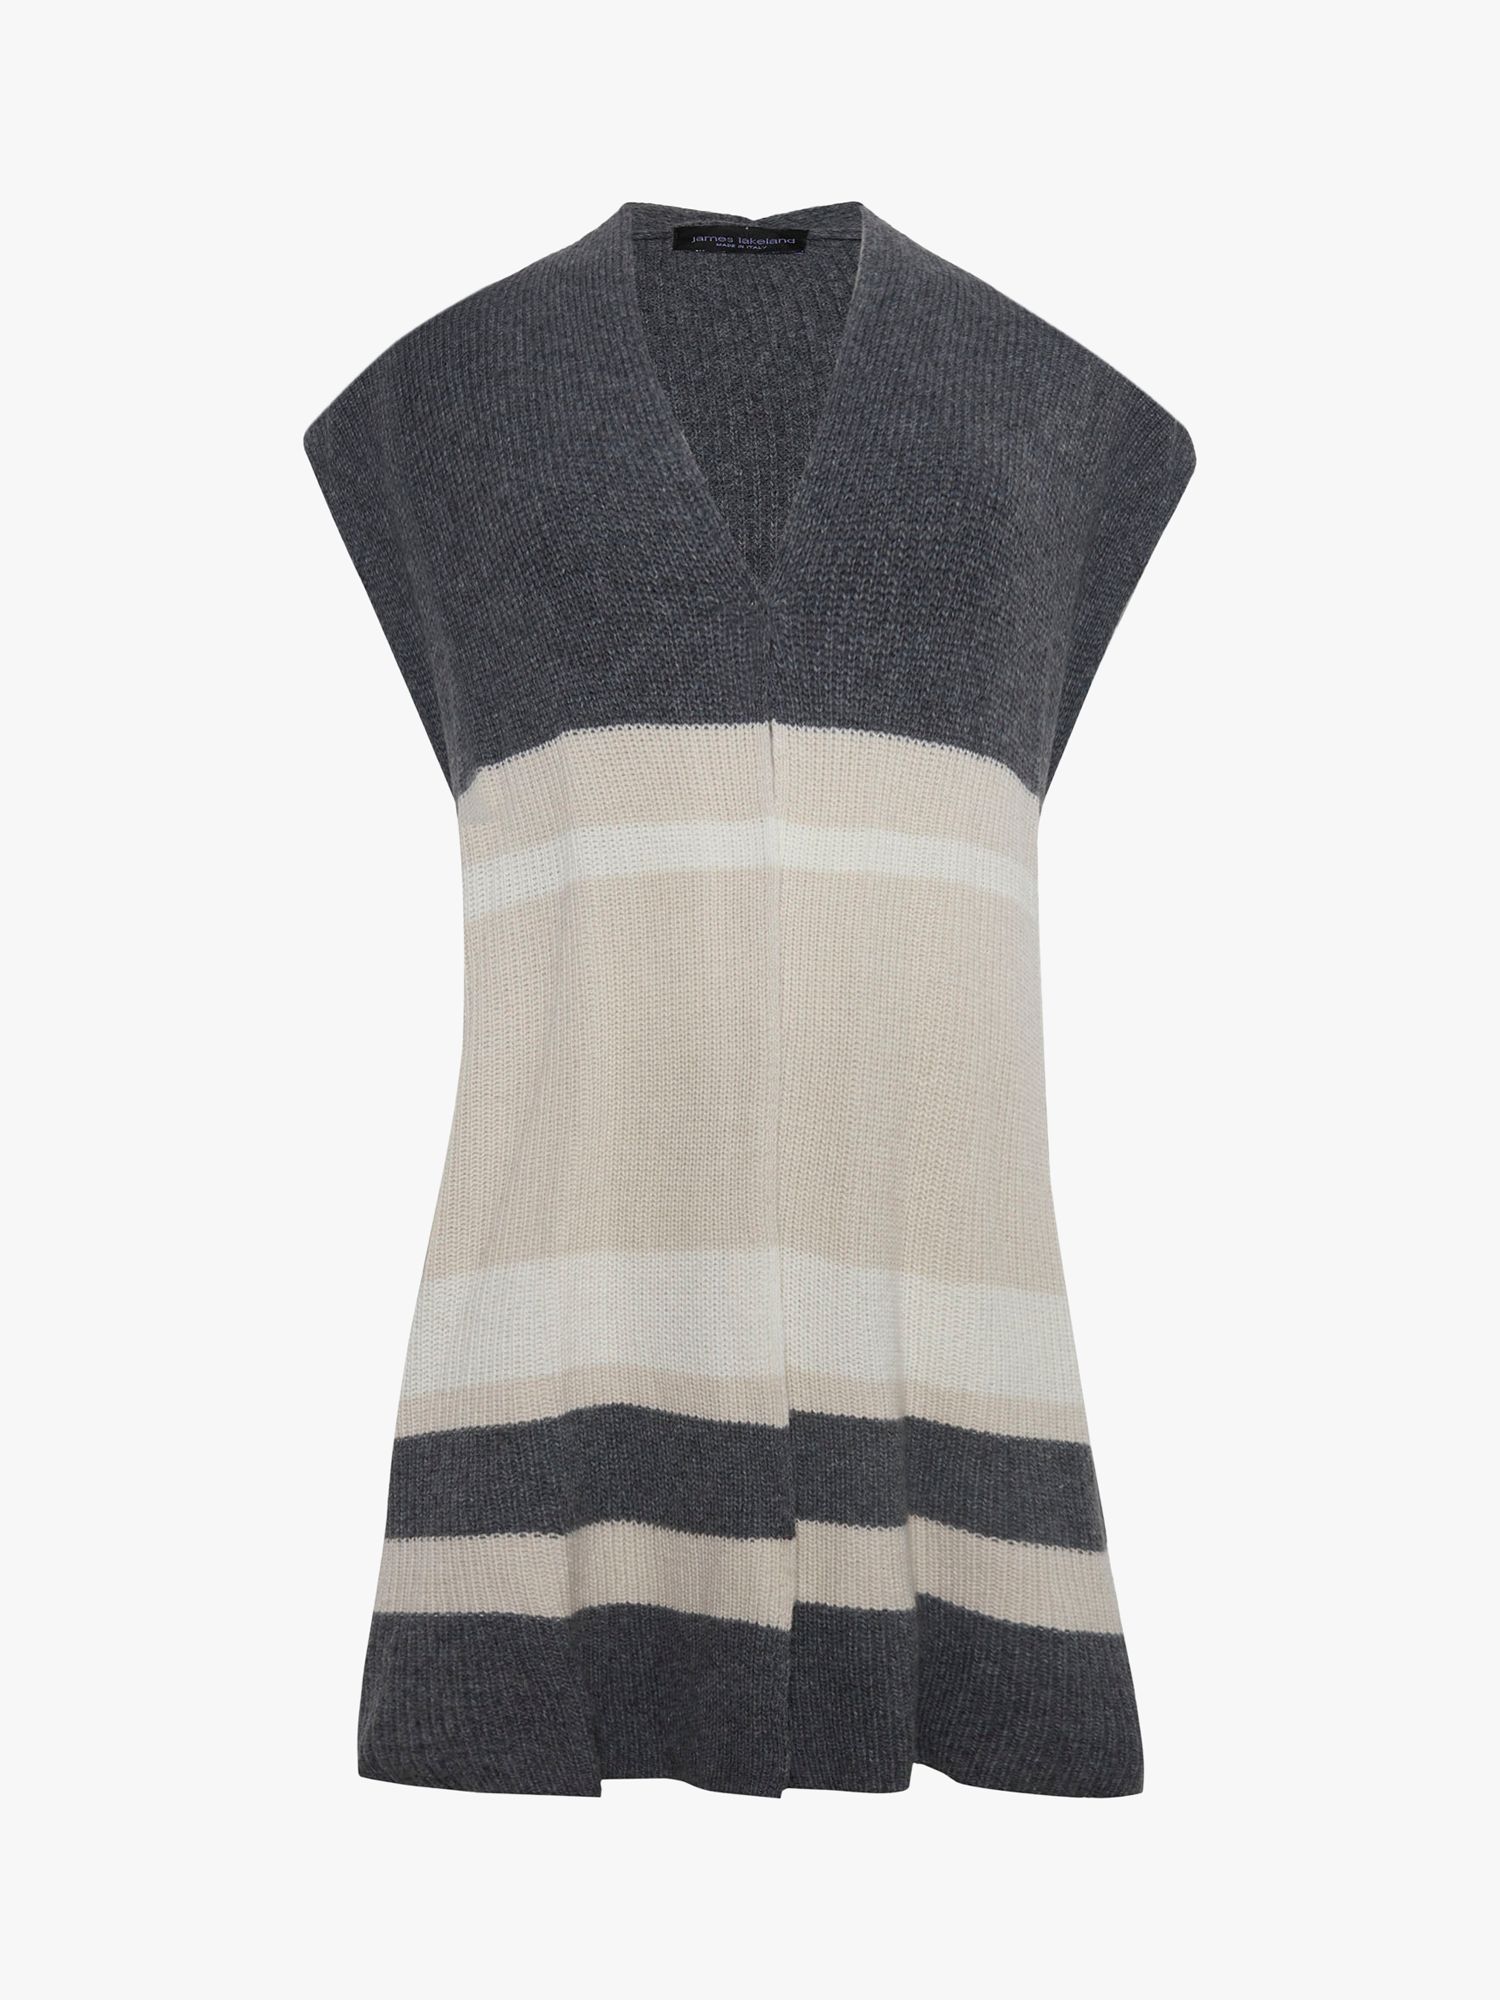 James Lakeland Striped Wool Blend Sleeveless Cardigan, Grey/Beige, 8